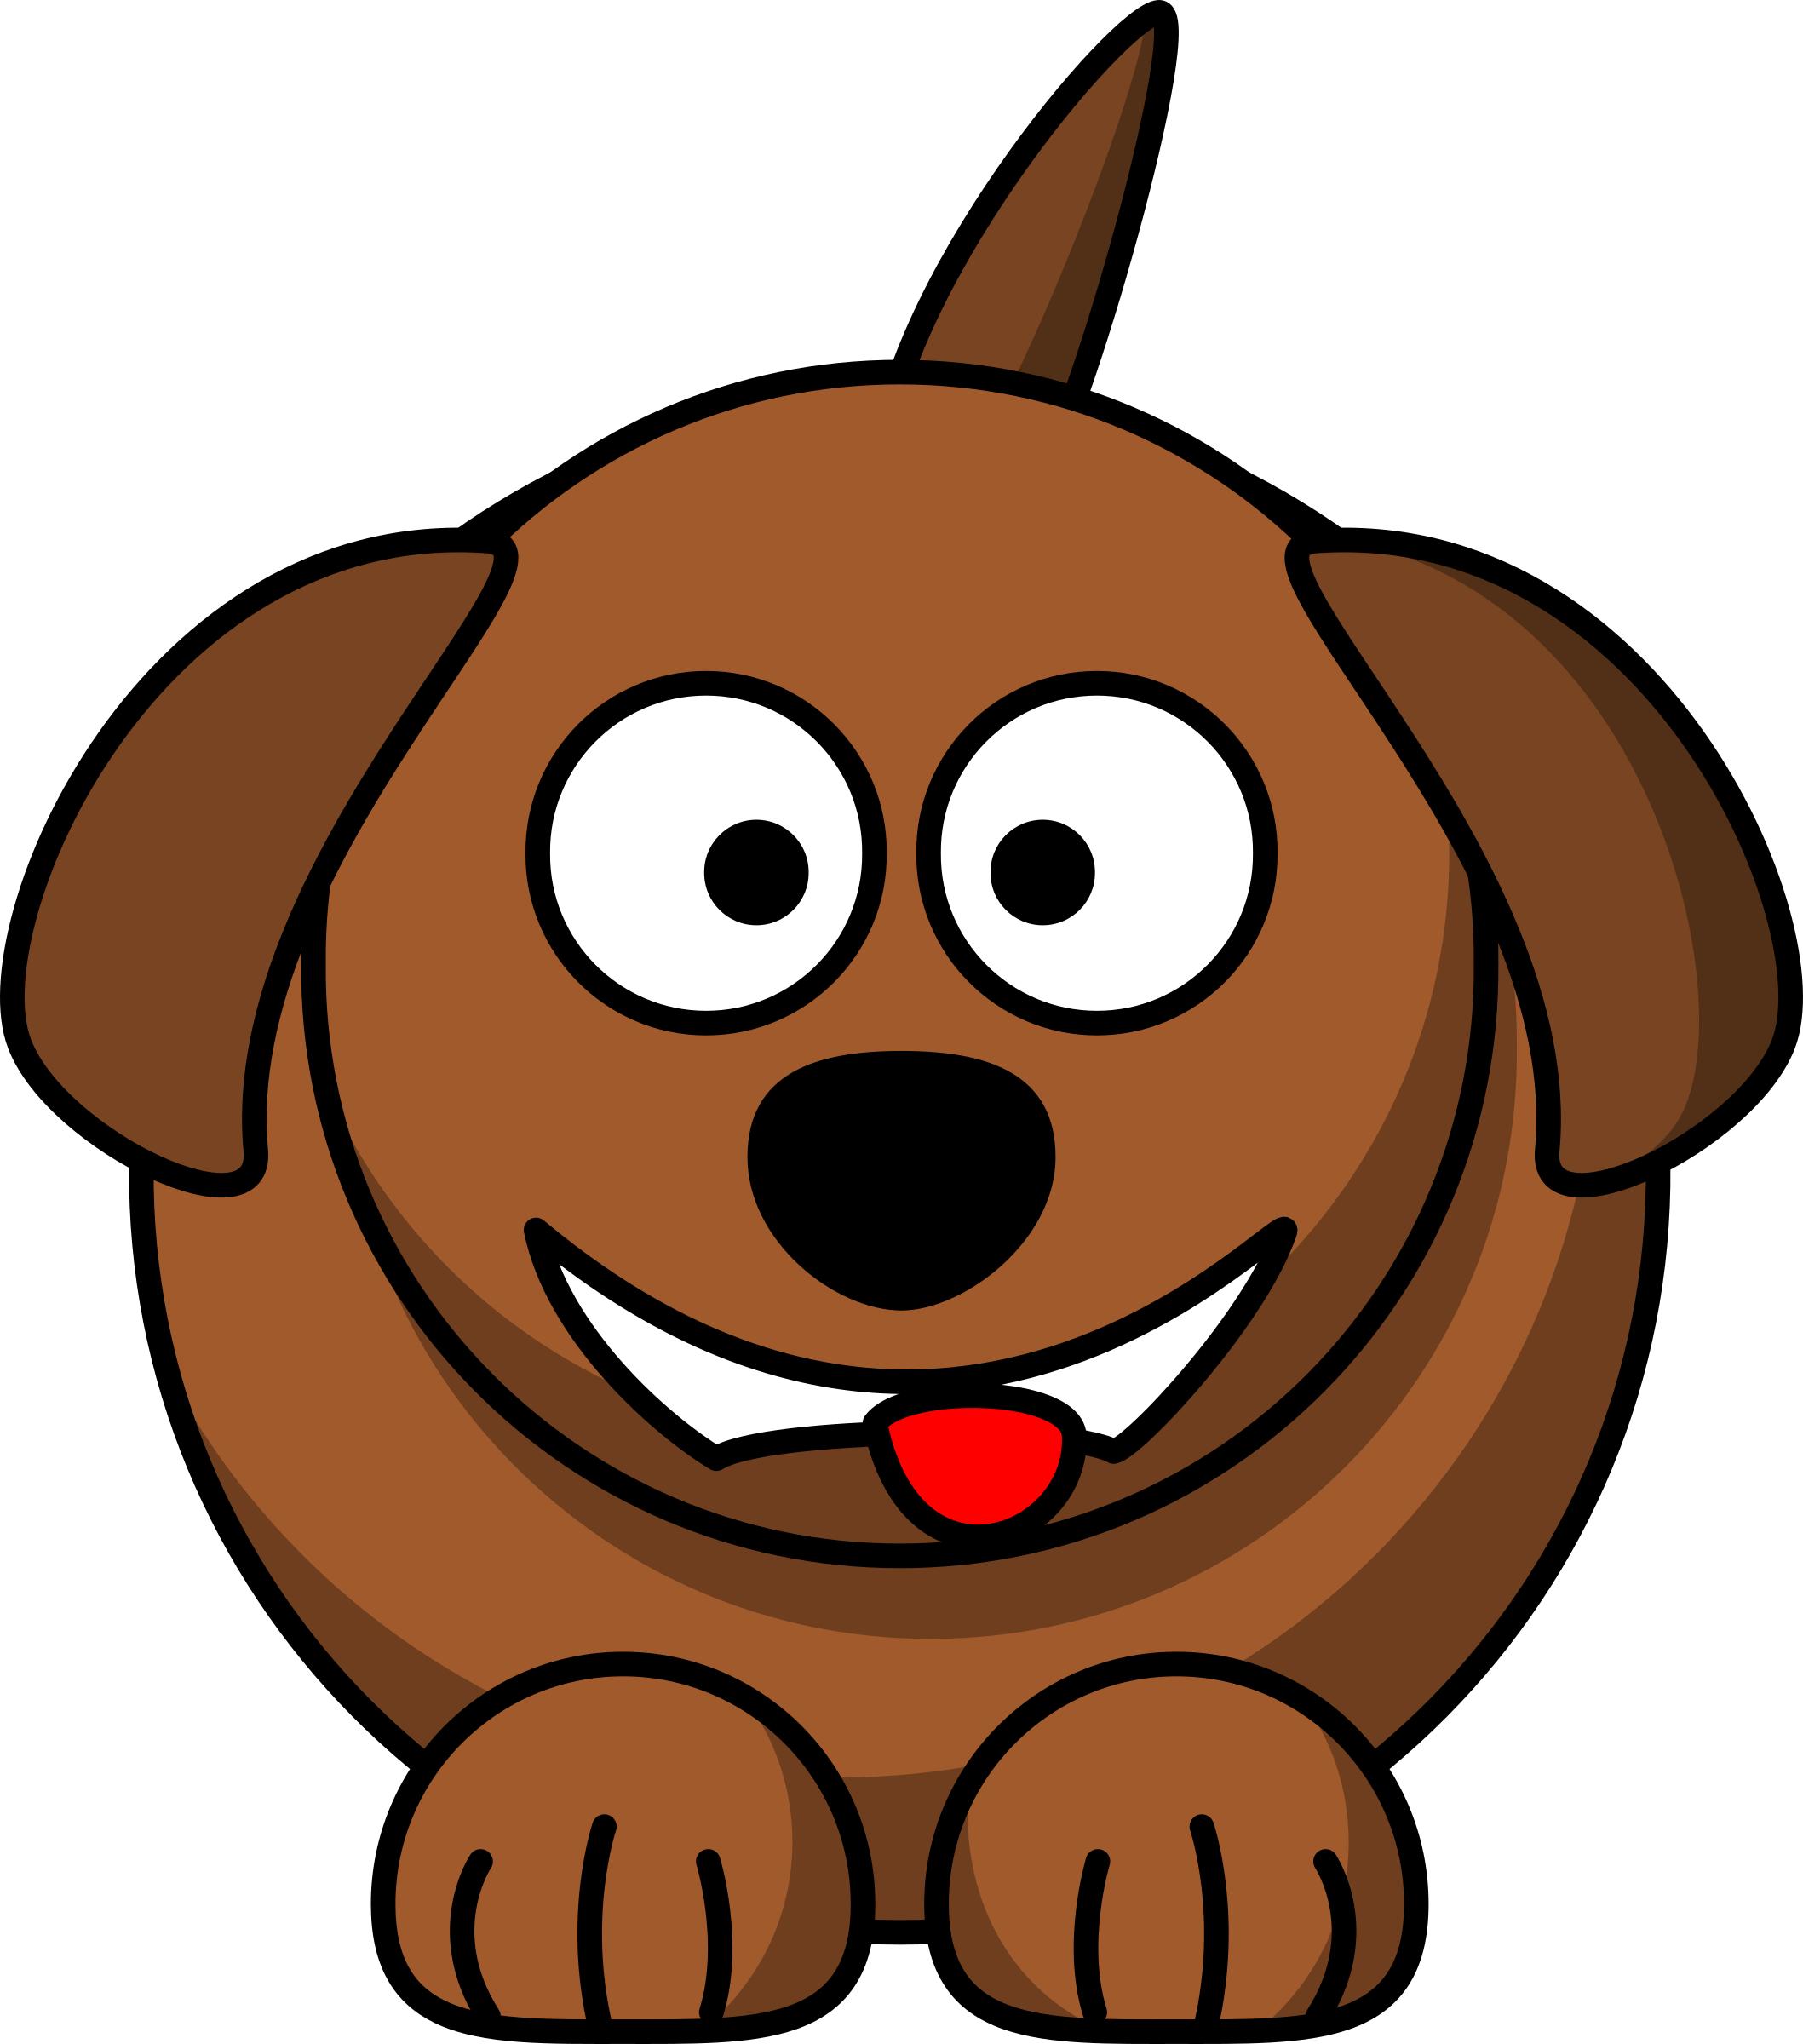 Cartoon dog laughing or smiling png